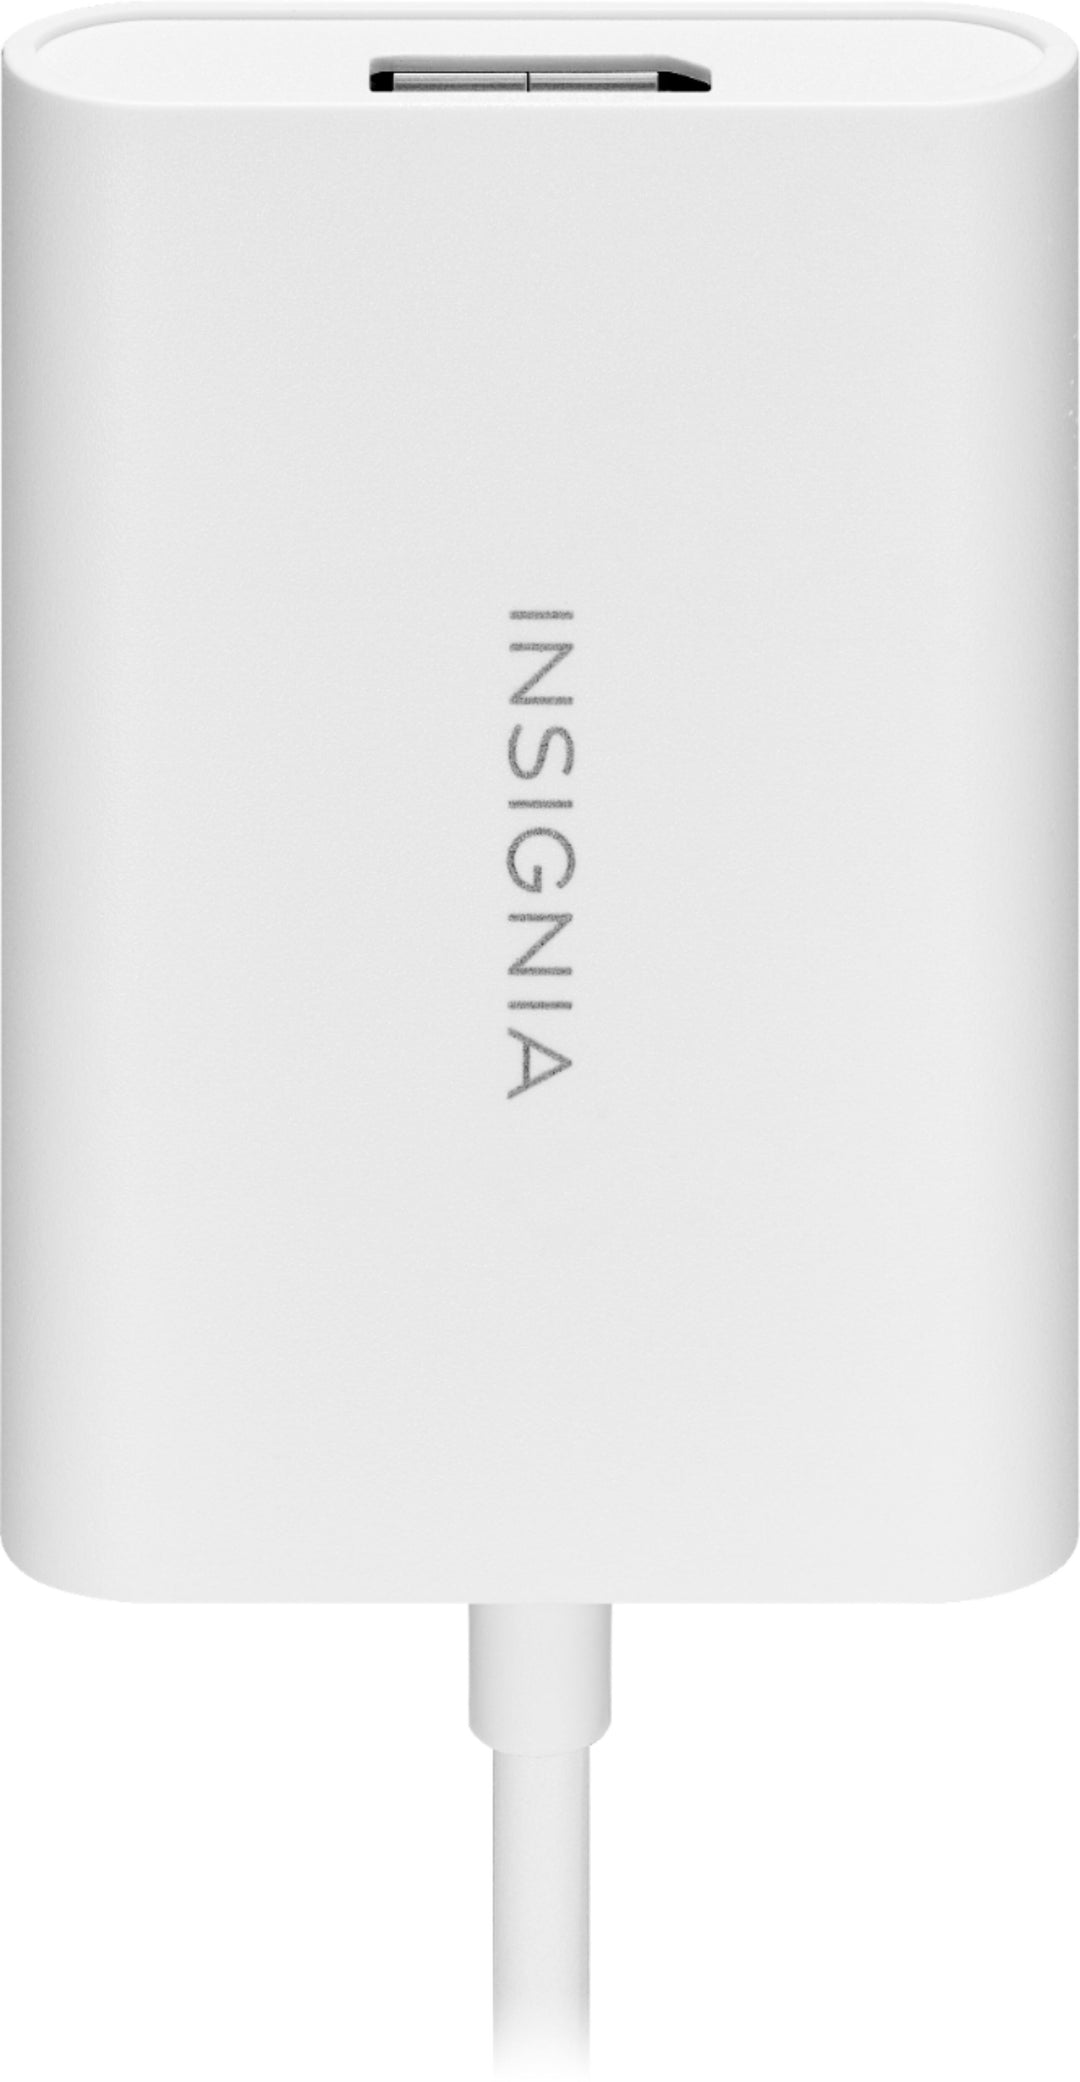 Insignia™ - USB 3.0 to DisplayPort Adapter - White_2